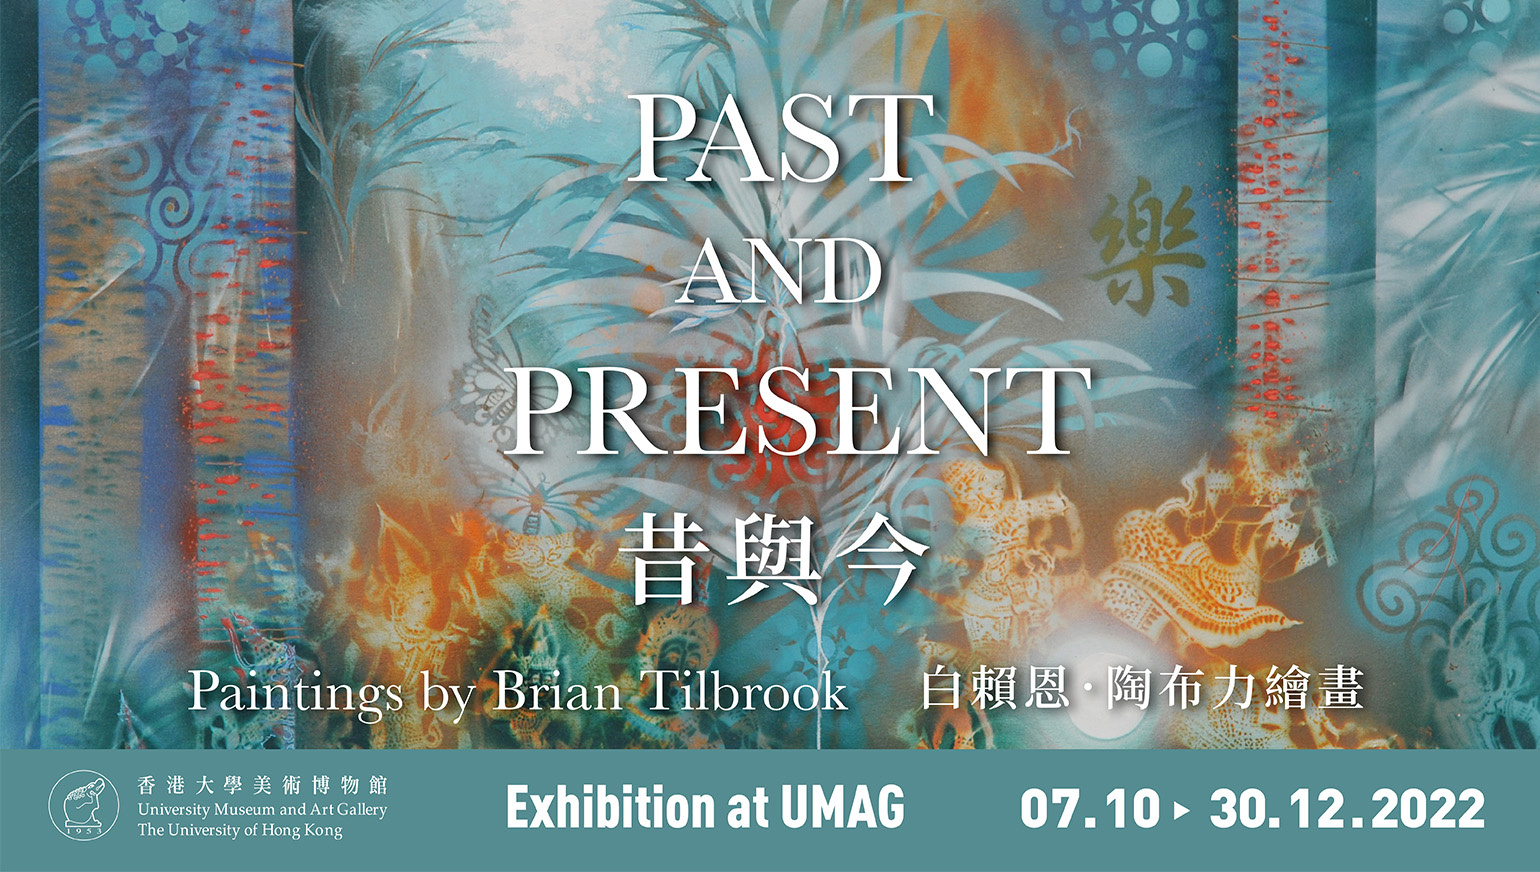 Exhibition at UMAG